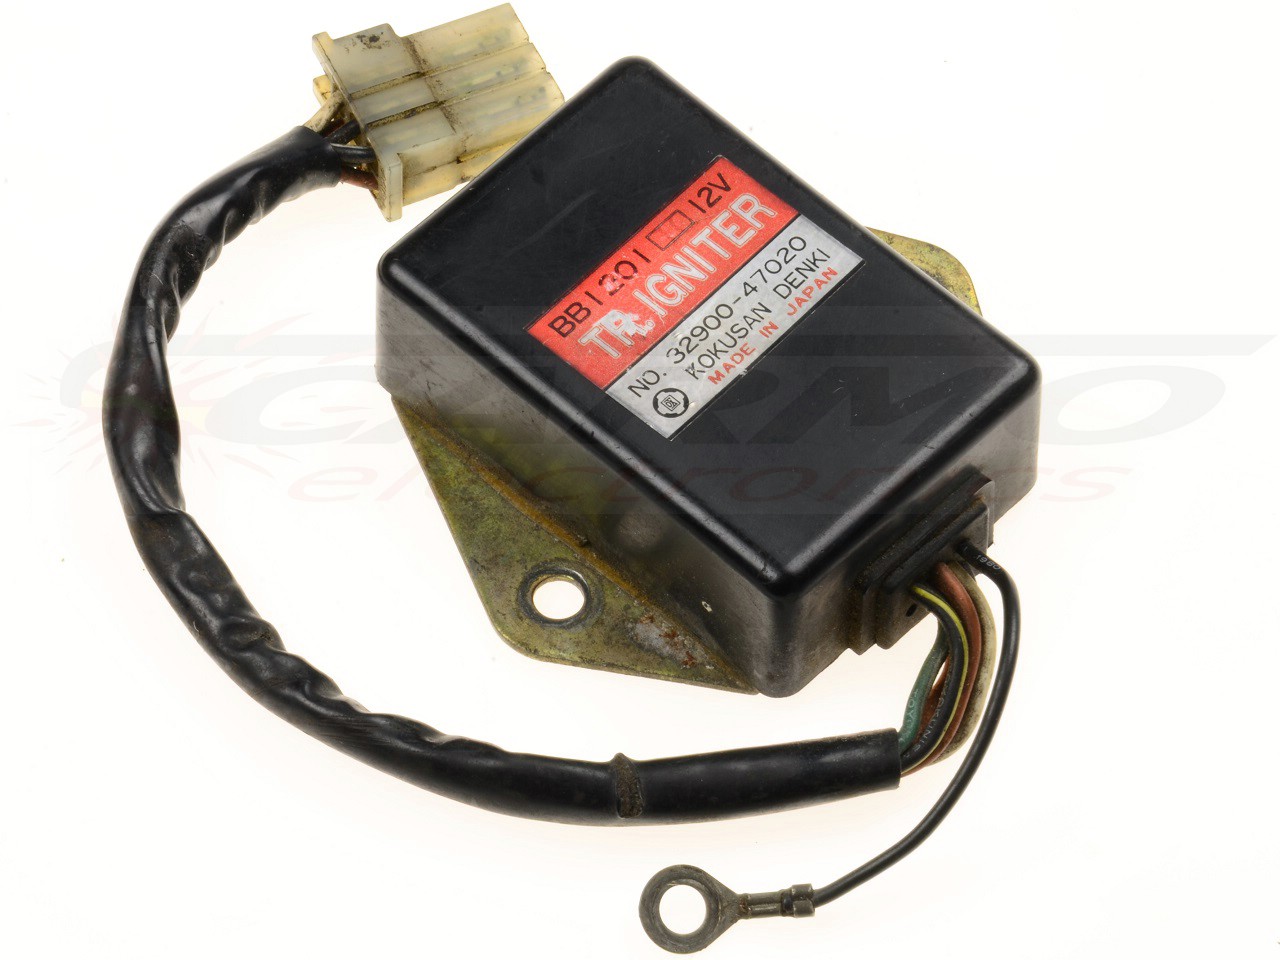 GS250 GS450 GS550 igniter ignition module CDI TCI Box (BB1201, 32900-47020)